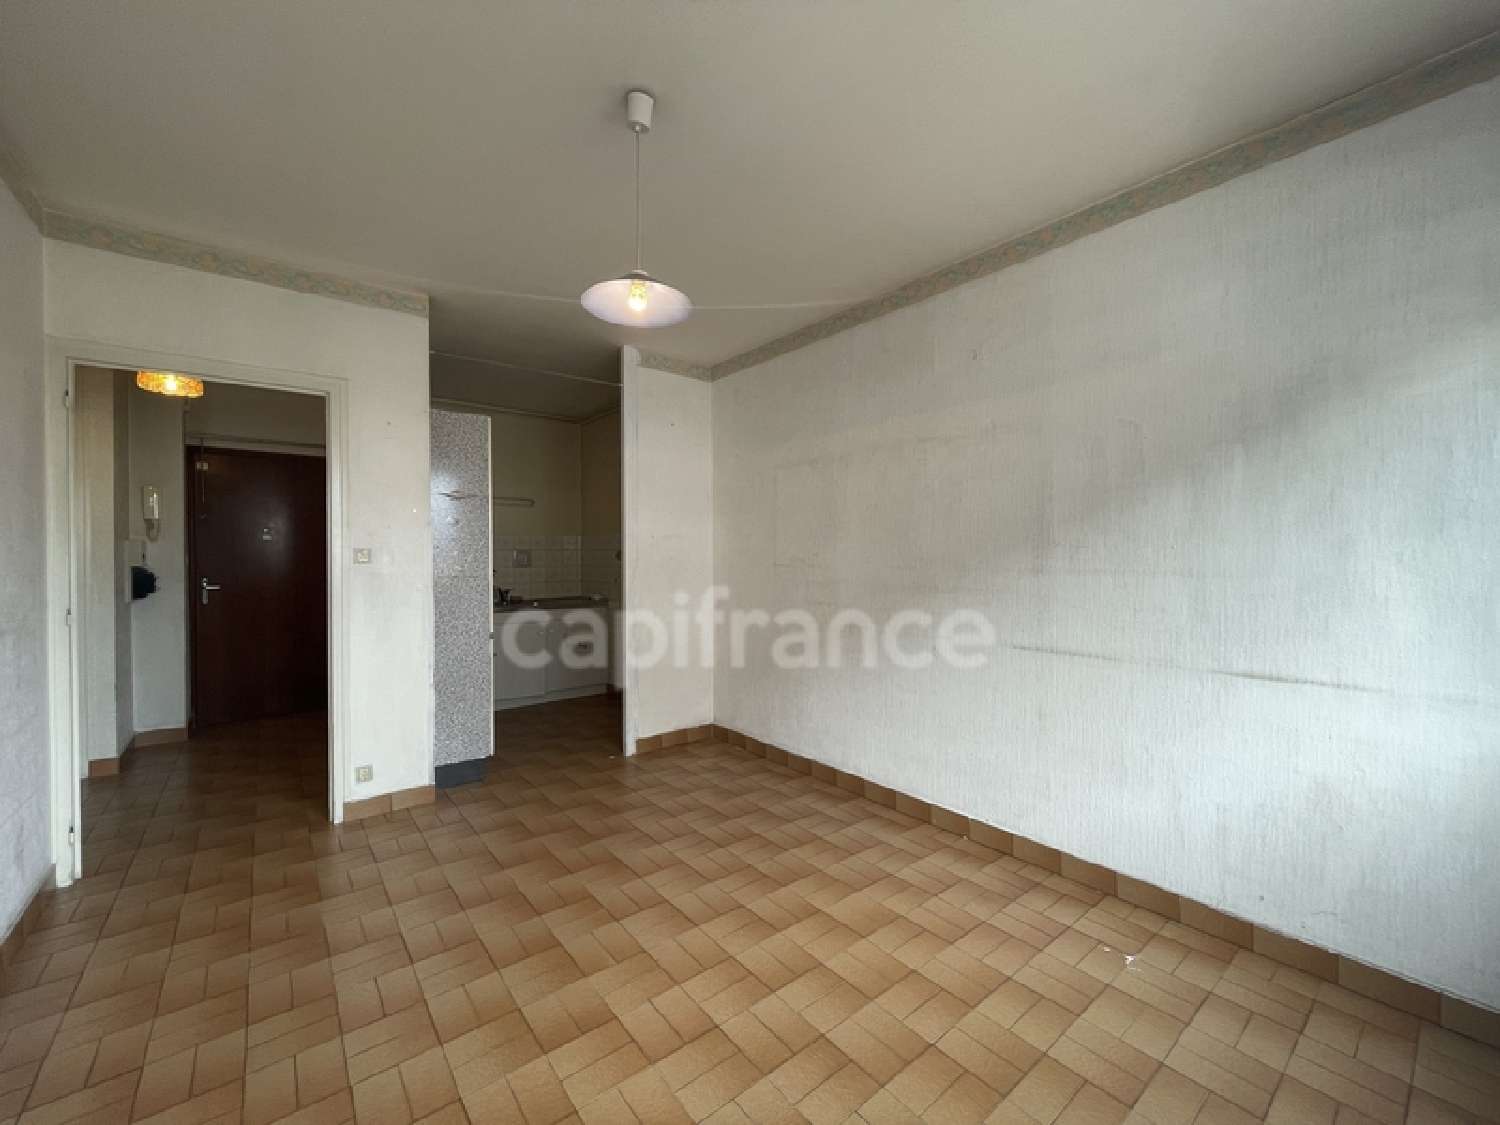  for sale apartment Annecy Haute-Savoie 1